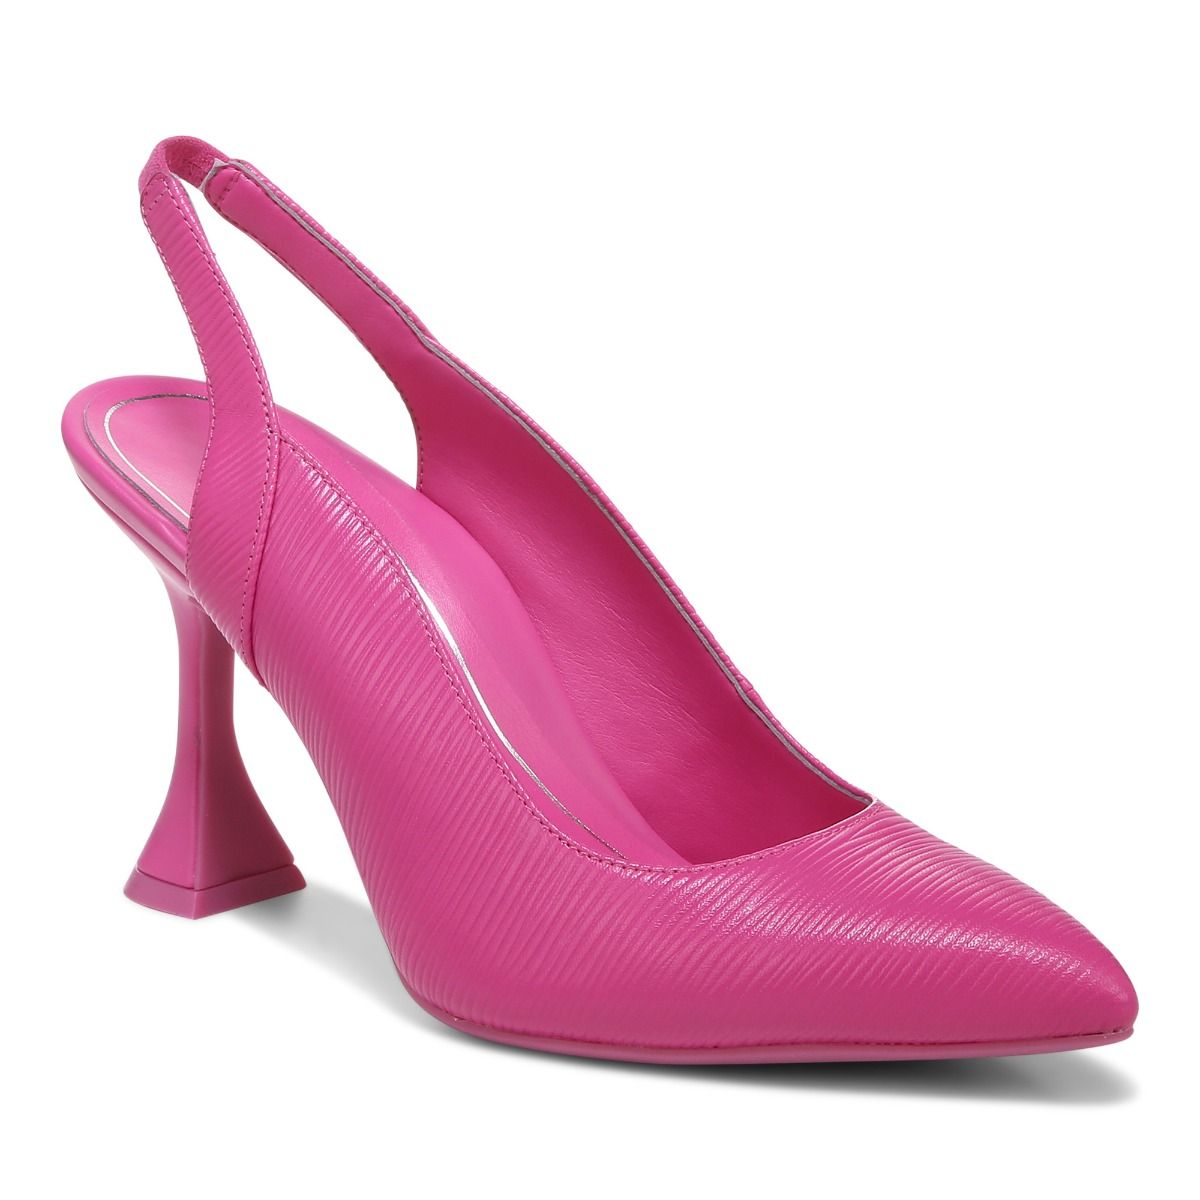 Prada Women's Red Leather Open Toe Slingback Heels Shoes Size 8.5M / 39